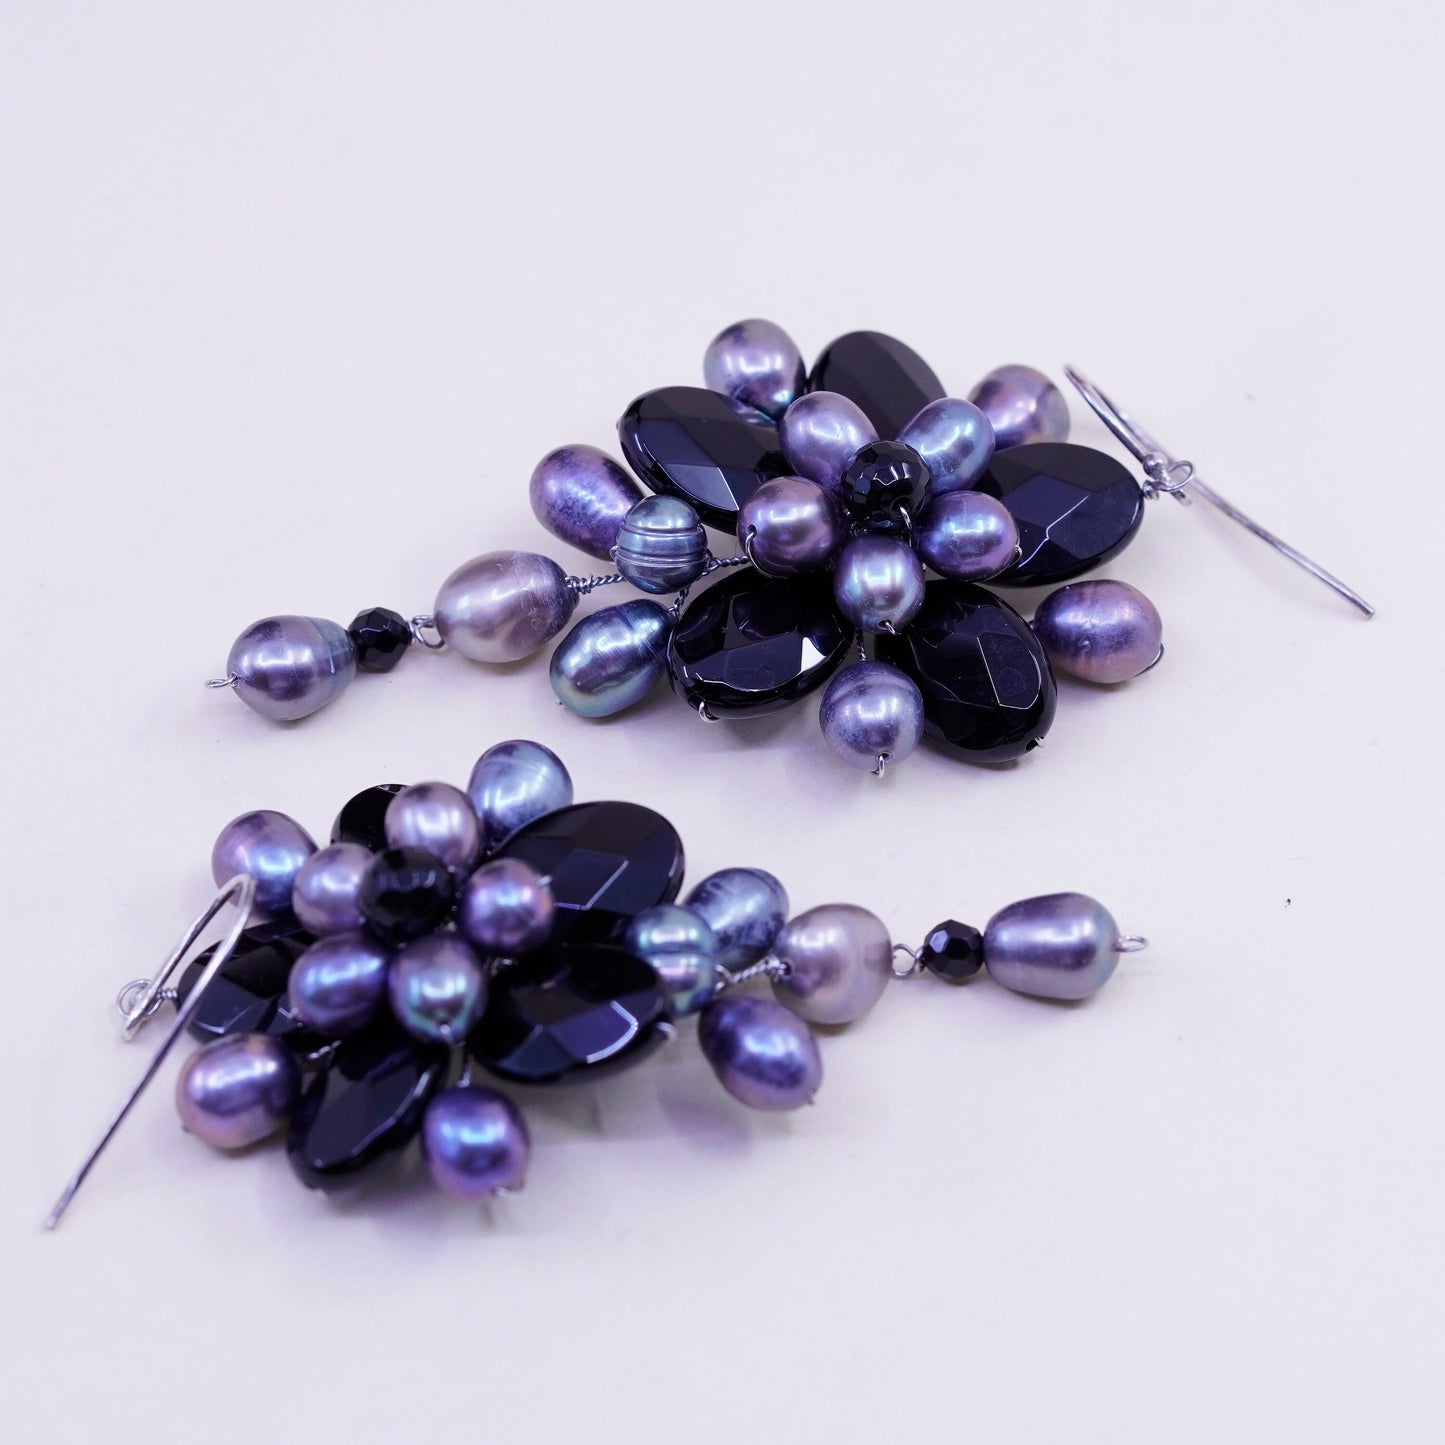 Vintage Soms Sterling 925 silver handmade earrings with flower pearl obsidian